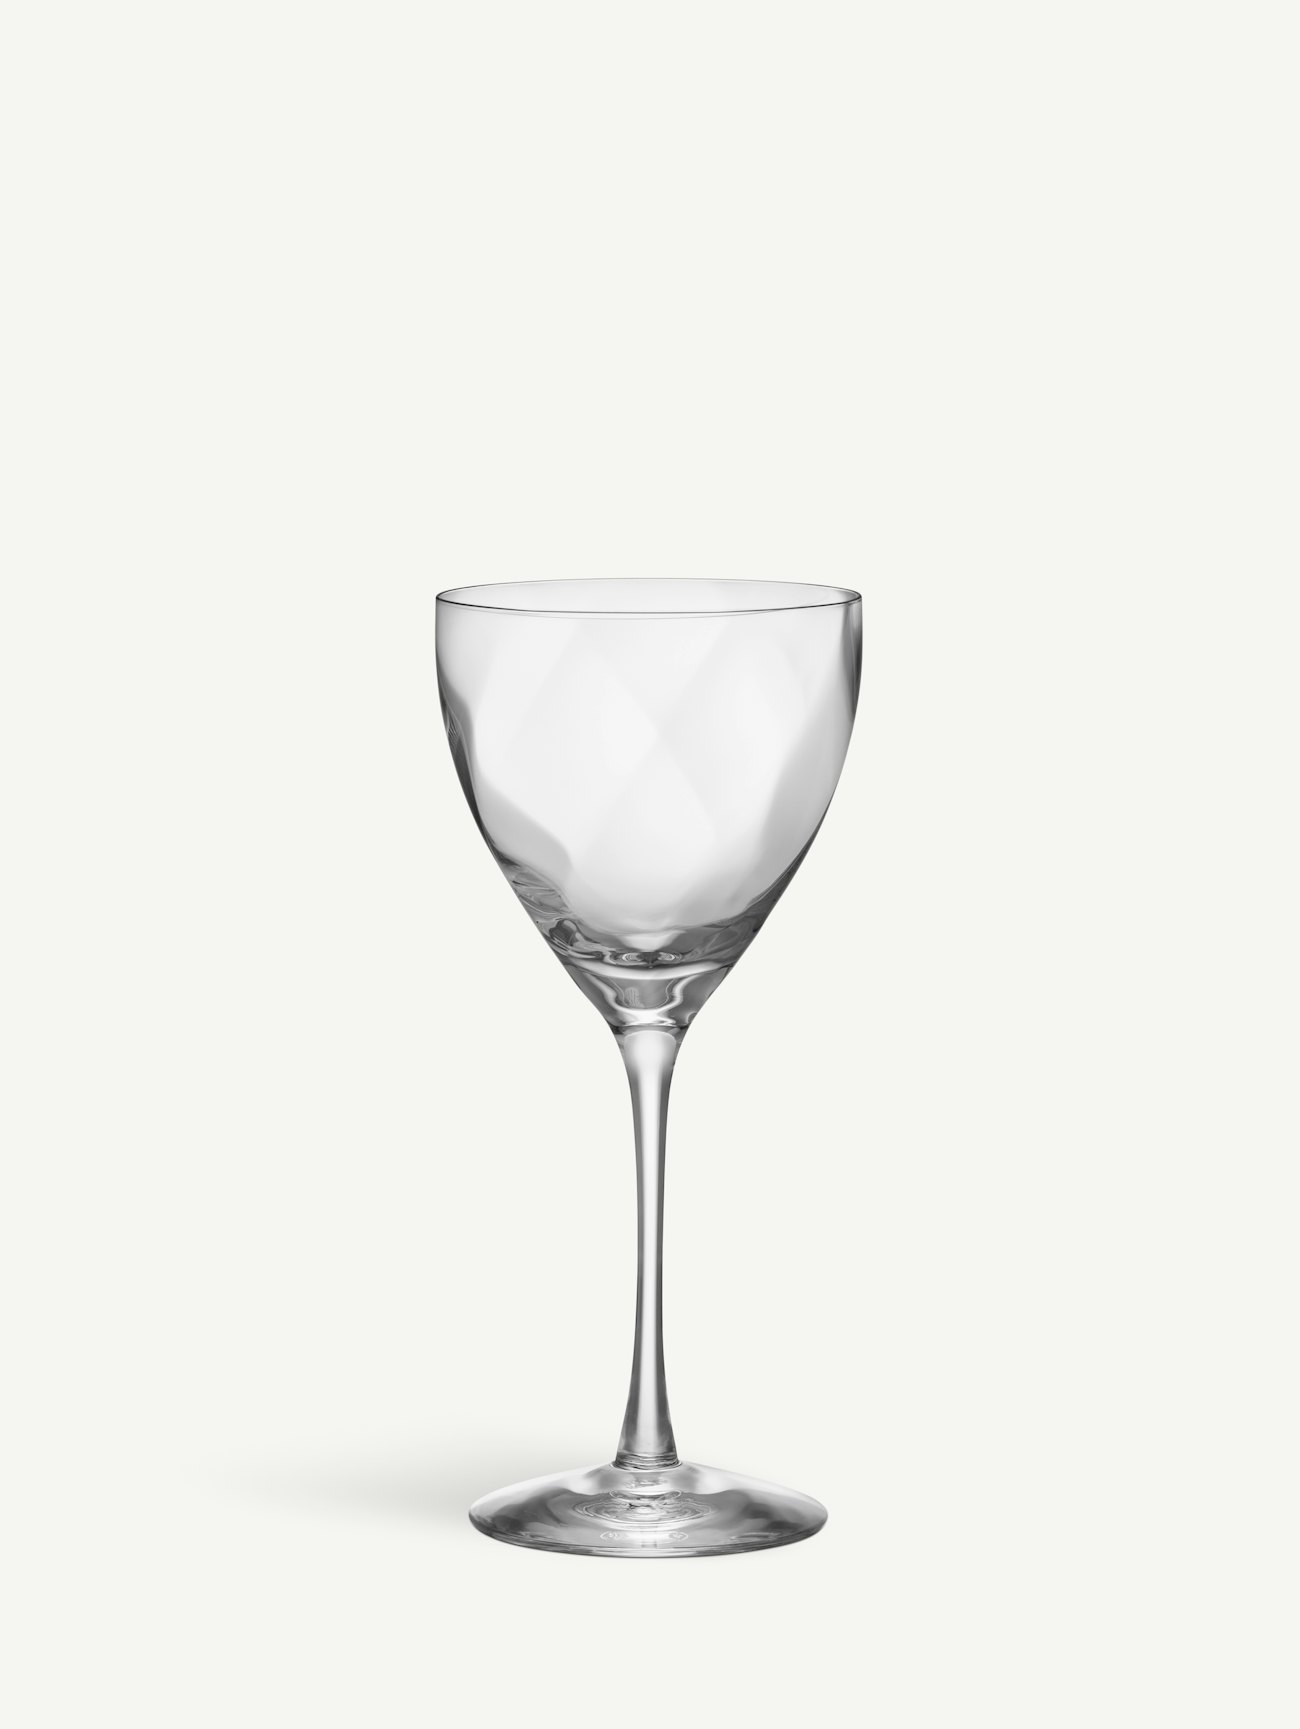 Château wine glass 30cl